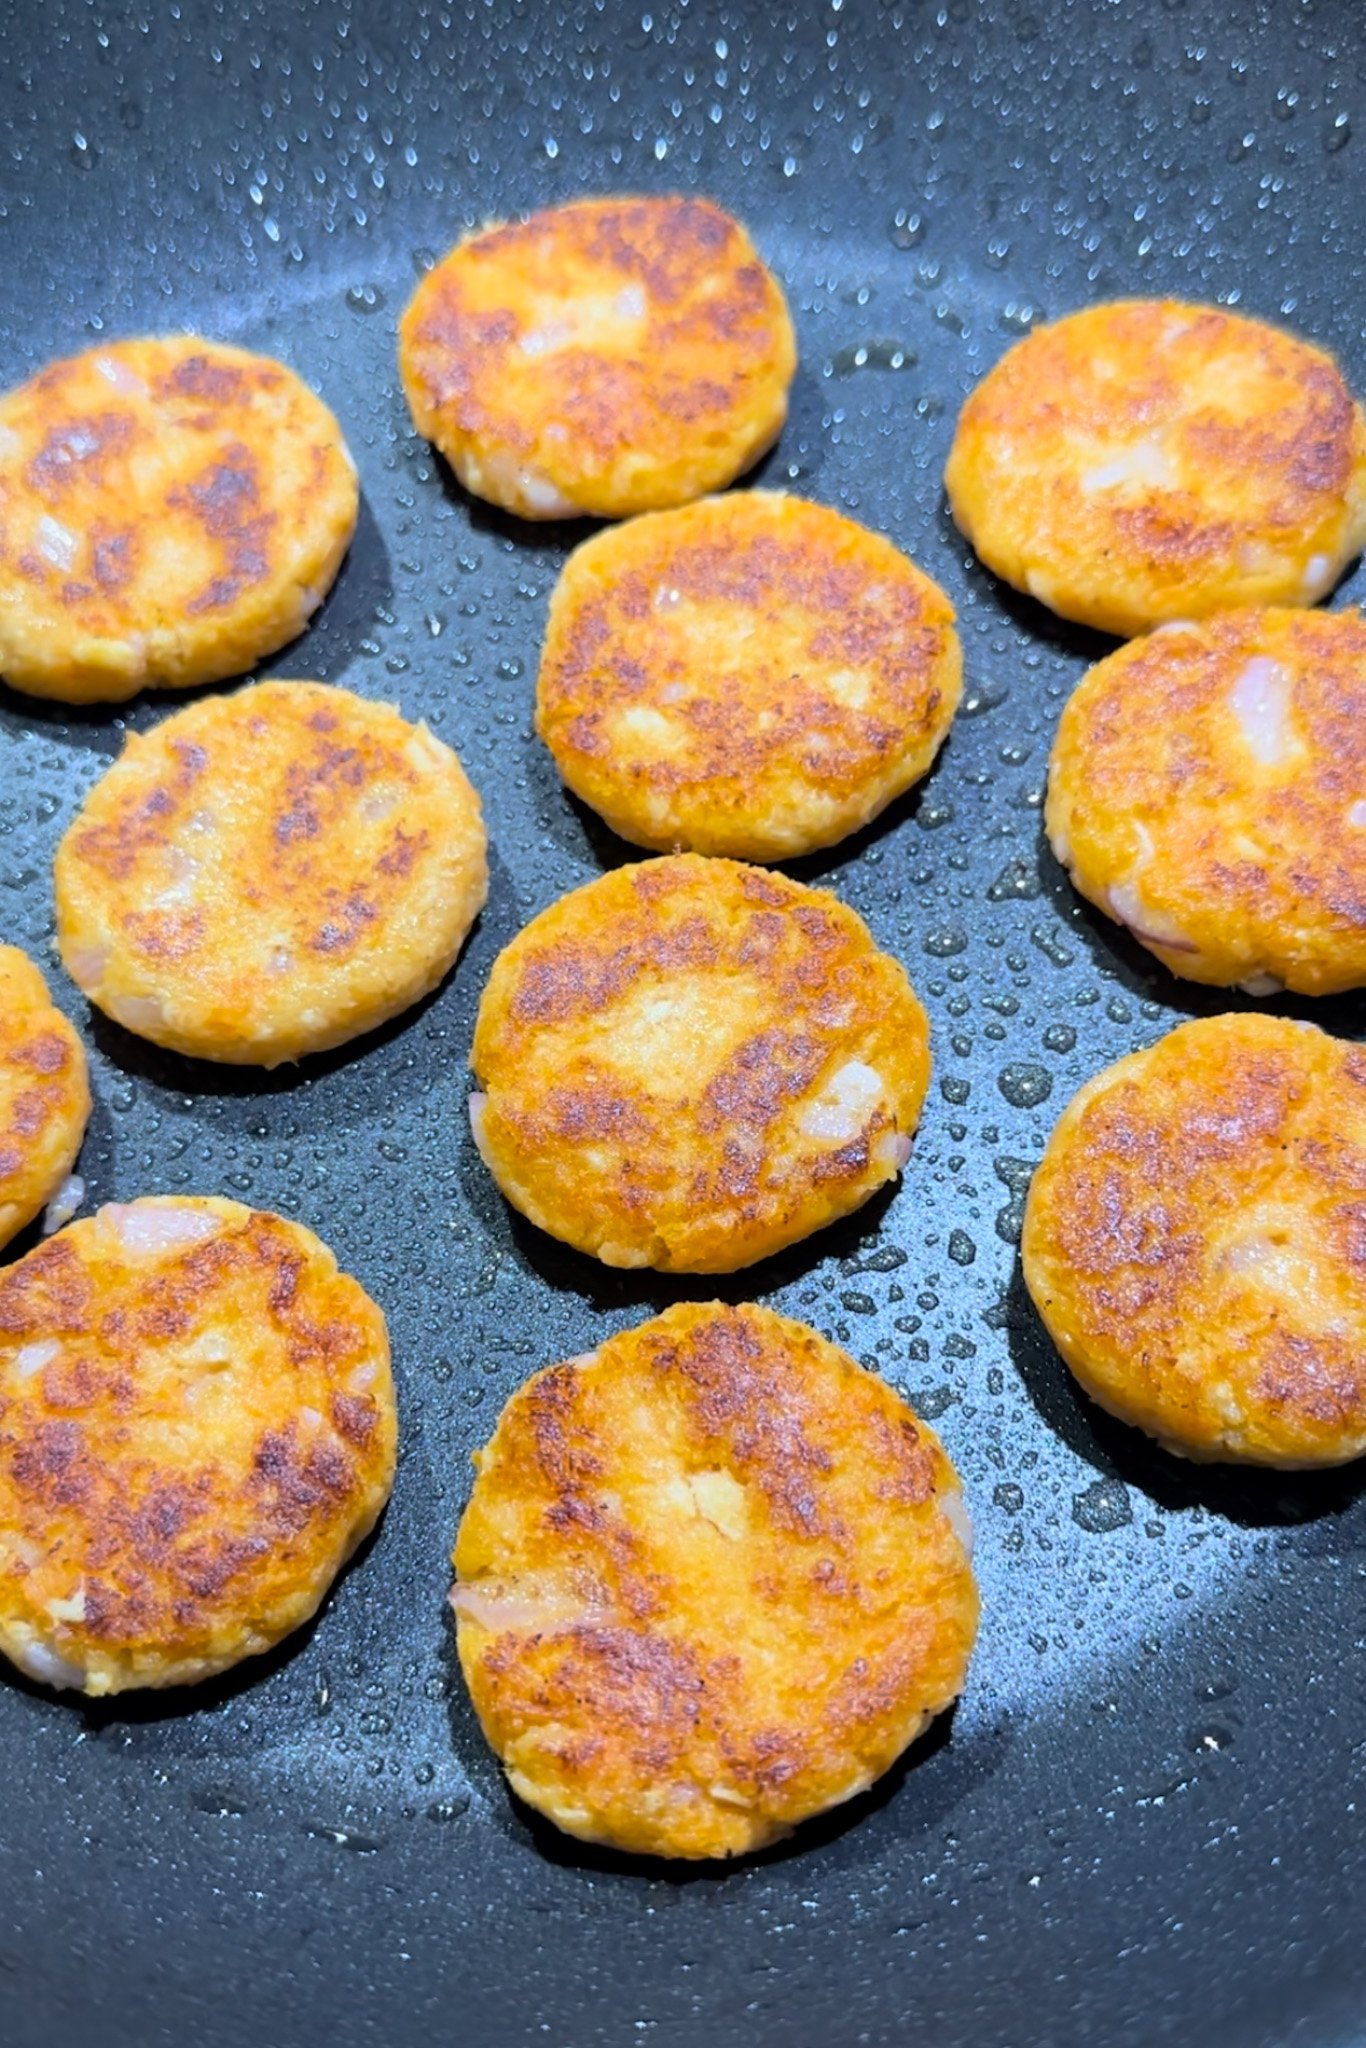 Sweet potato salmon cakes cooking in pan.